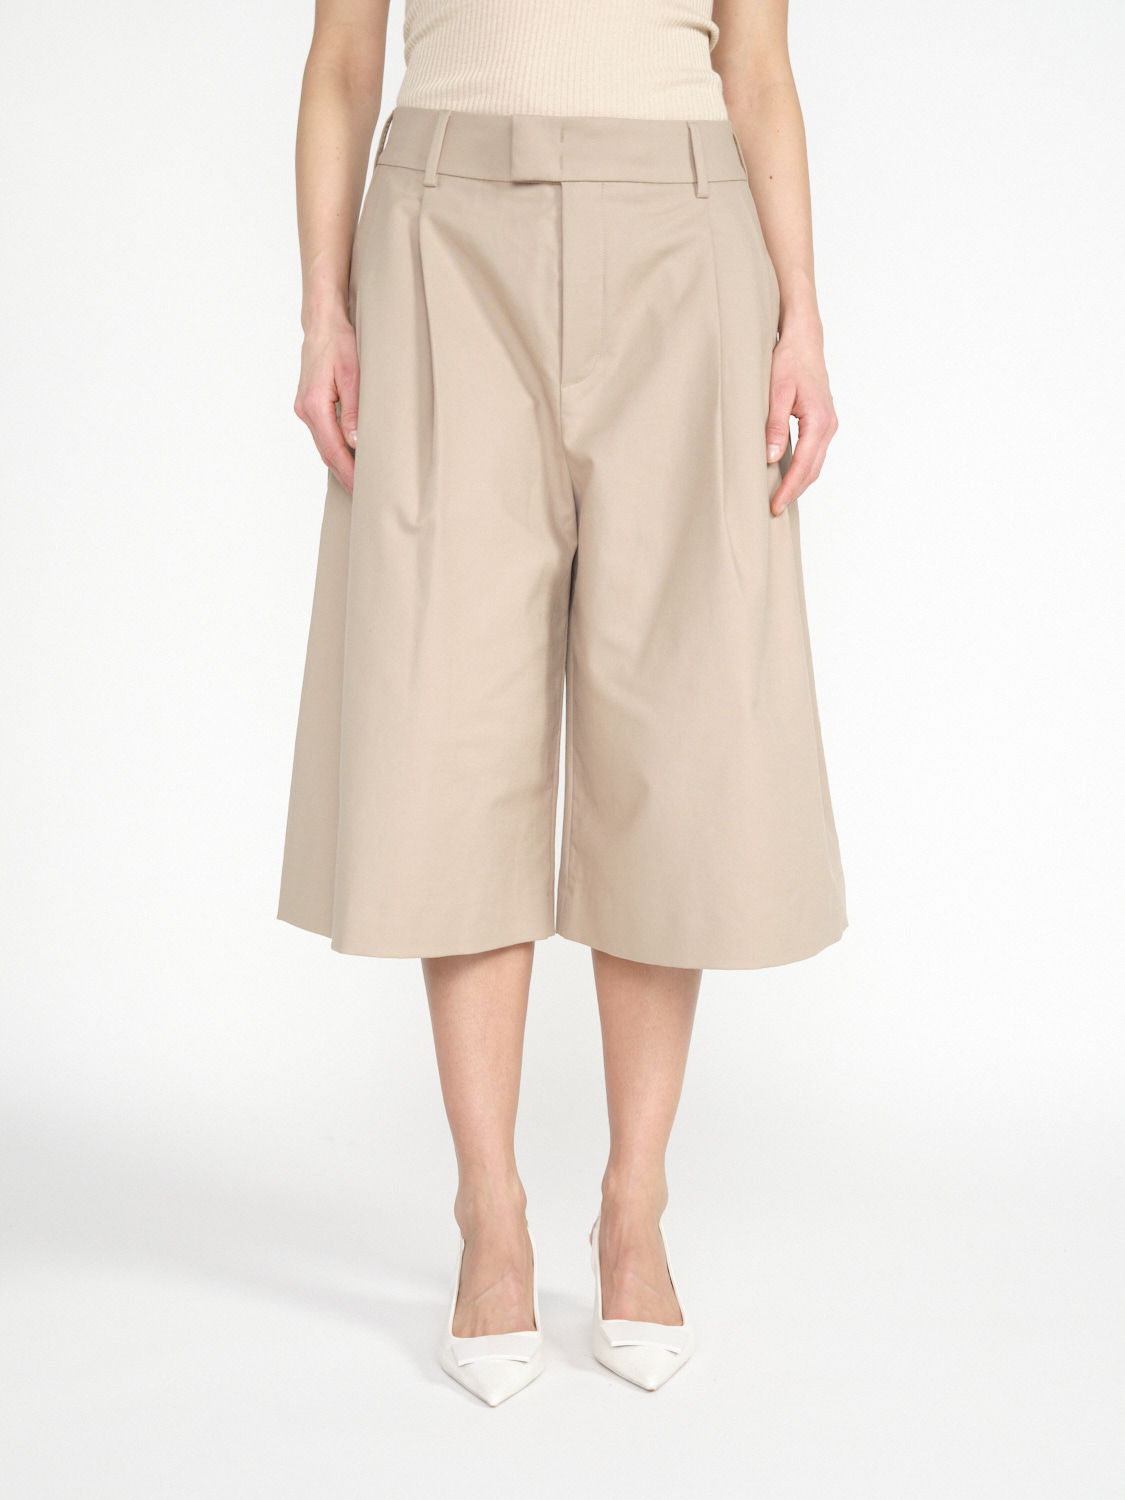 Rossi Jun oversized shorts in cotton satin  beige XS